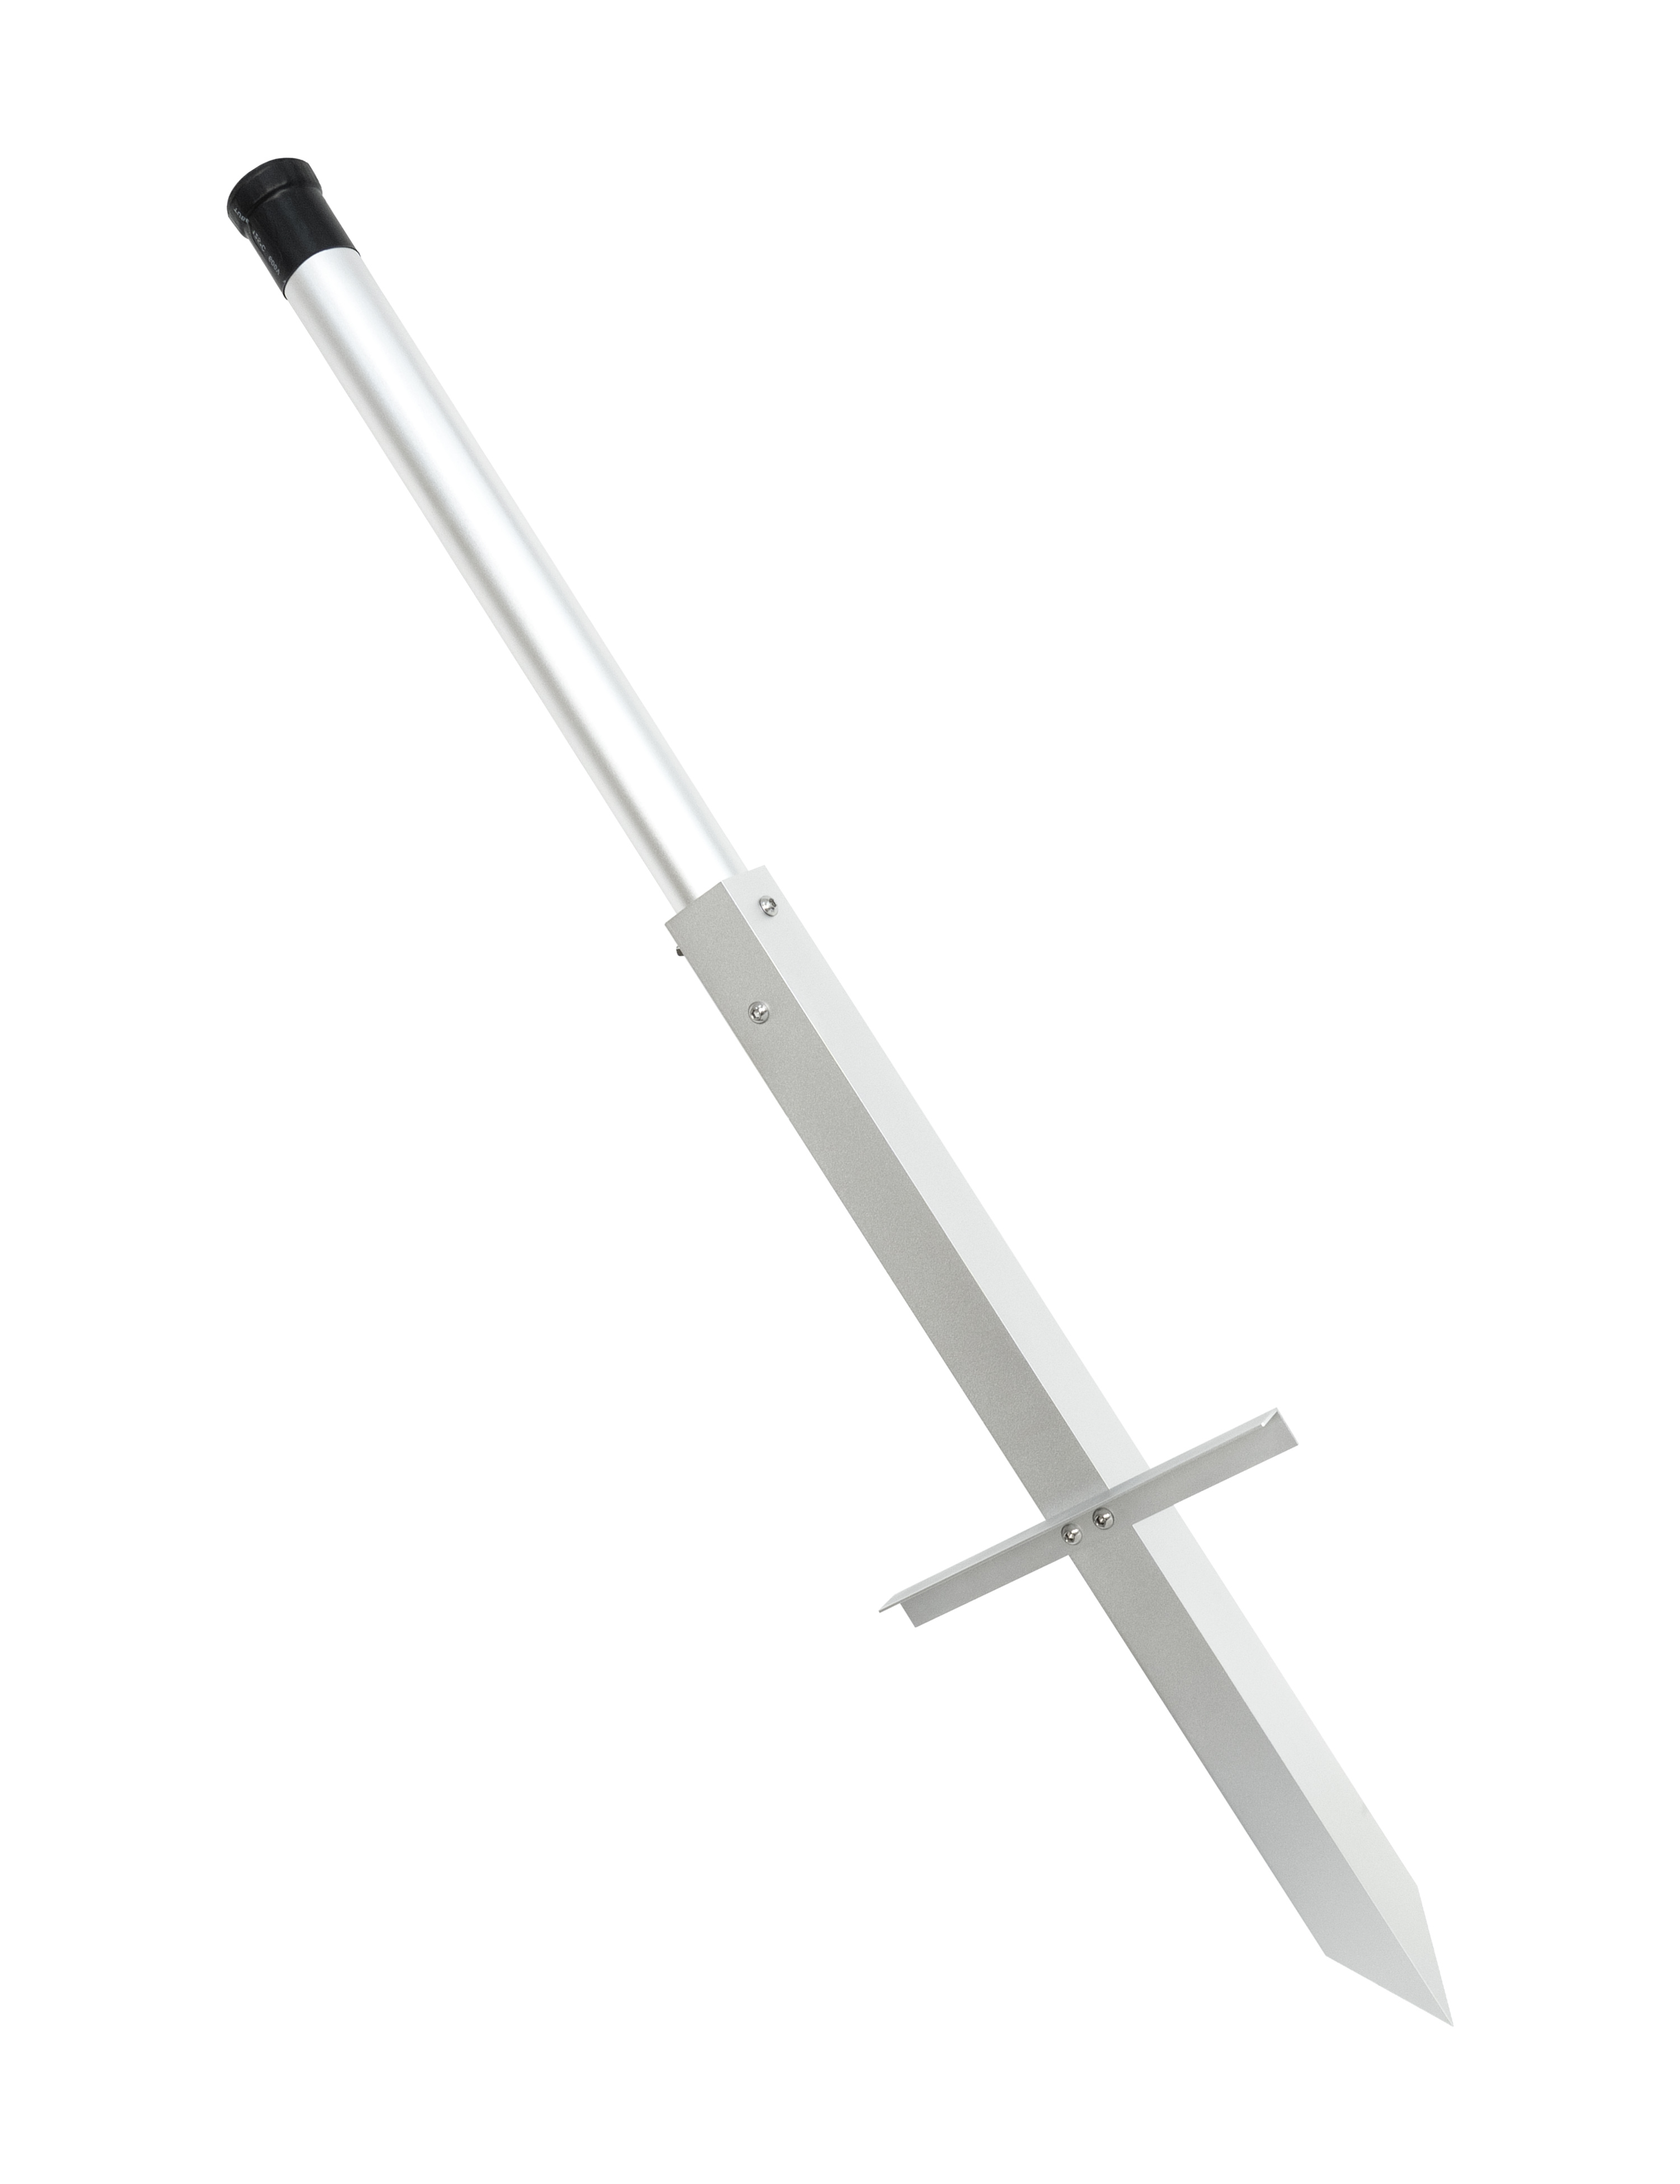 Aluminium Sand Spike Rod holder, Fishing Tackle